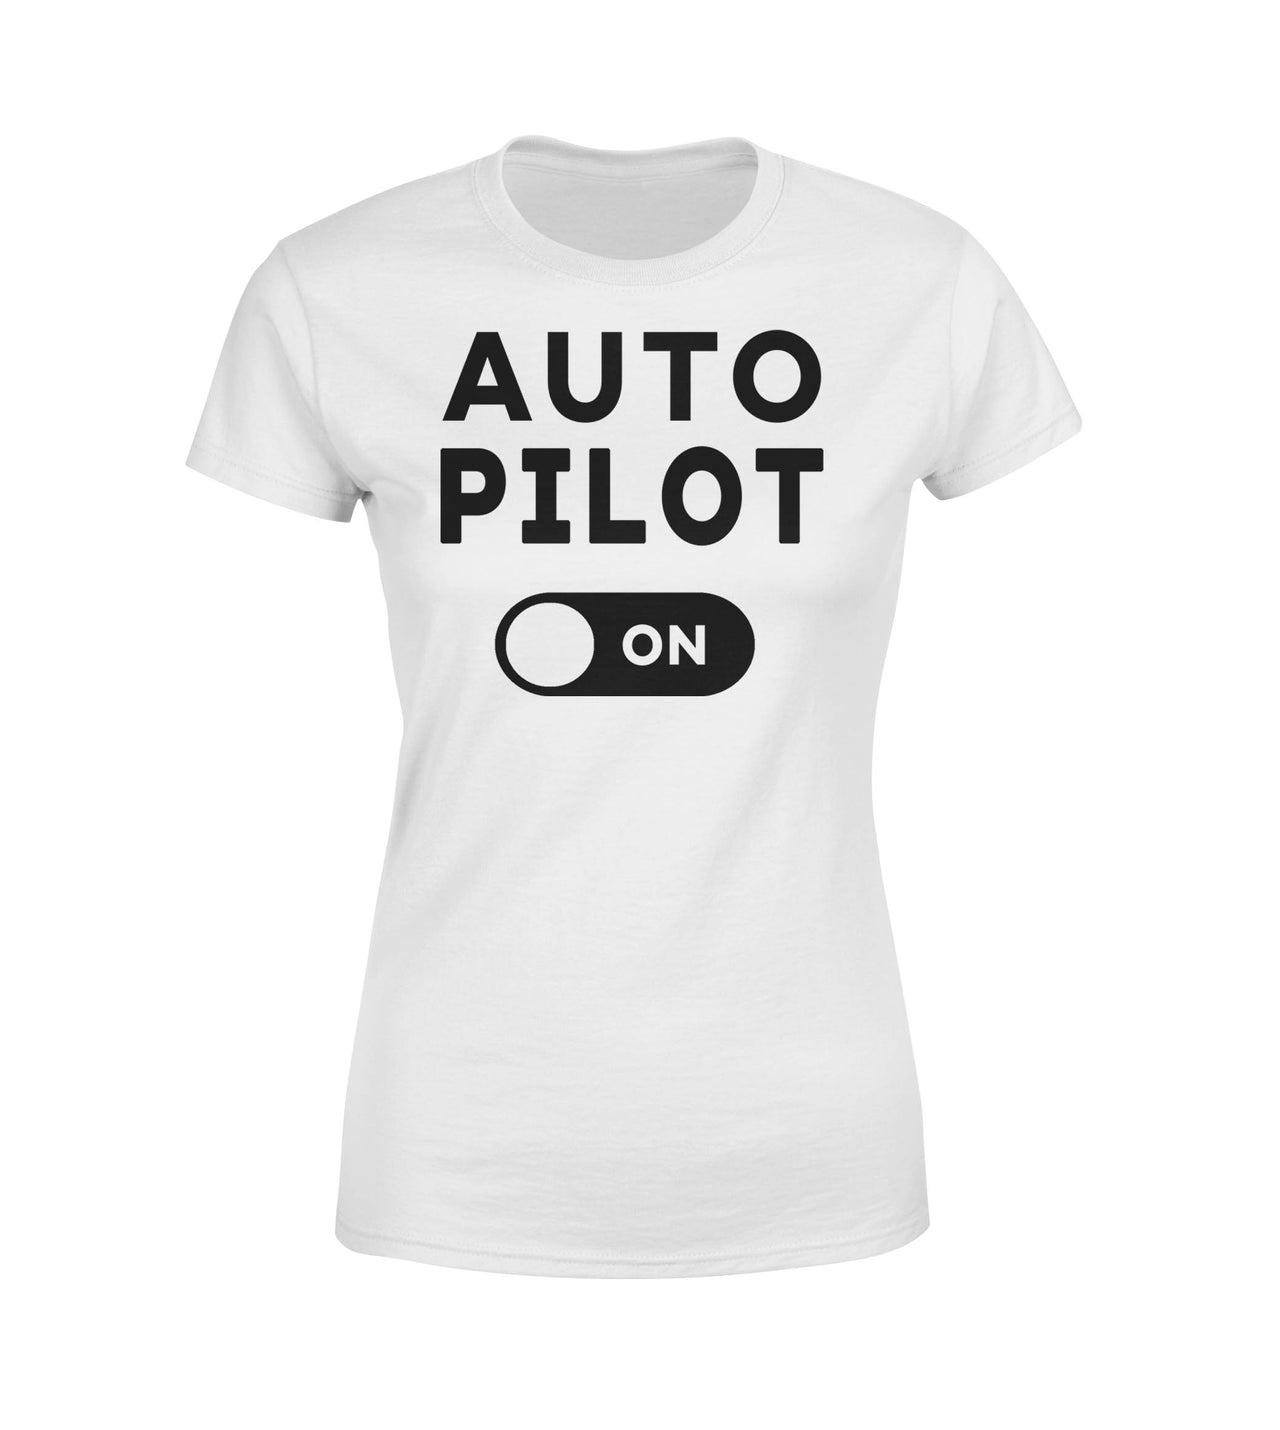 Auto Pilot ON Designed Women T-Shirts